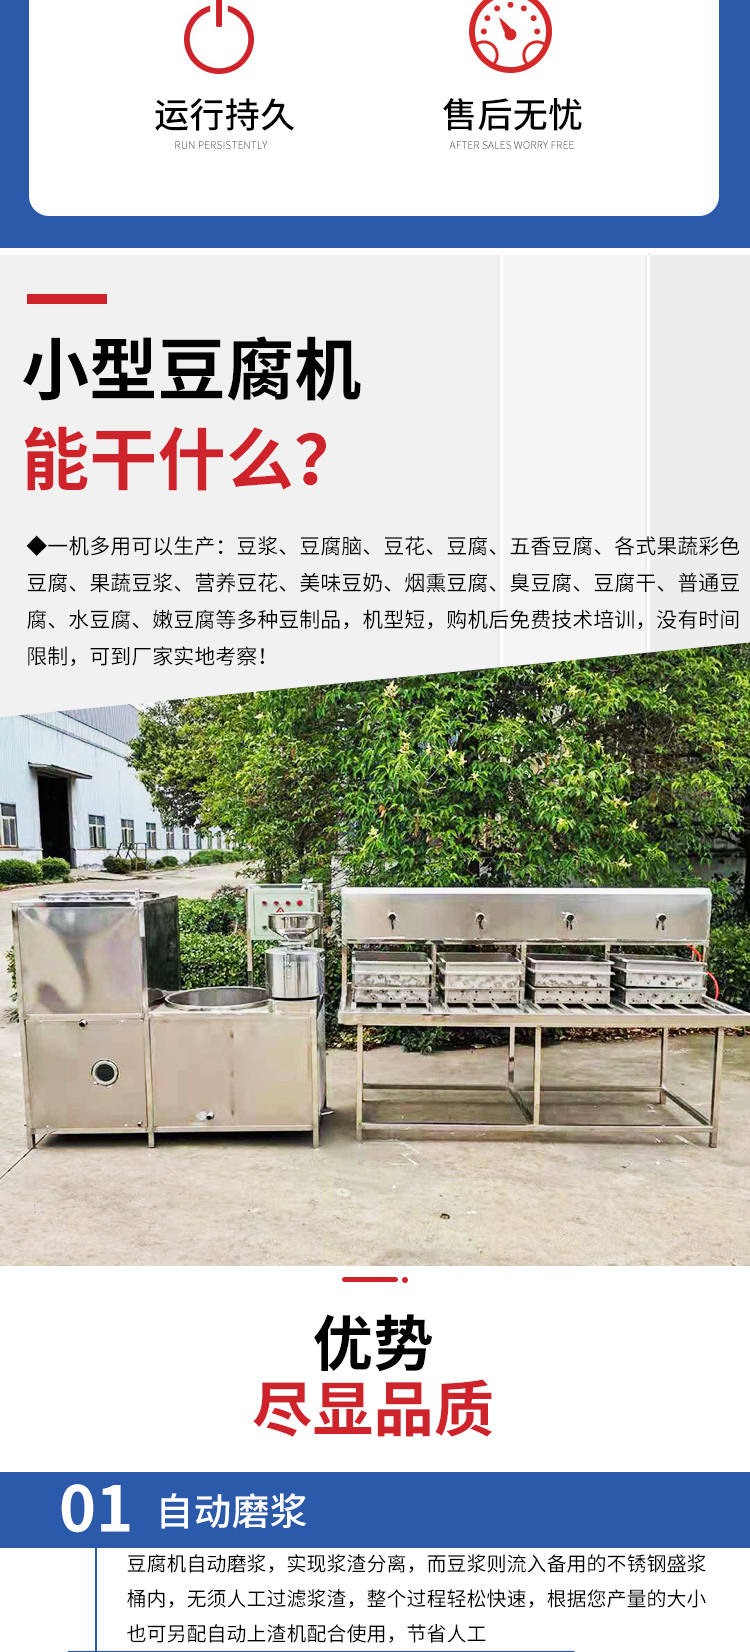 Household small tofu machine, fully automatic tofu production equipment, bean product processing machine